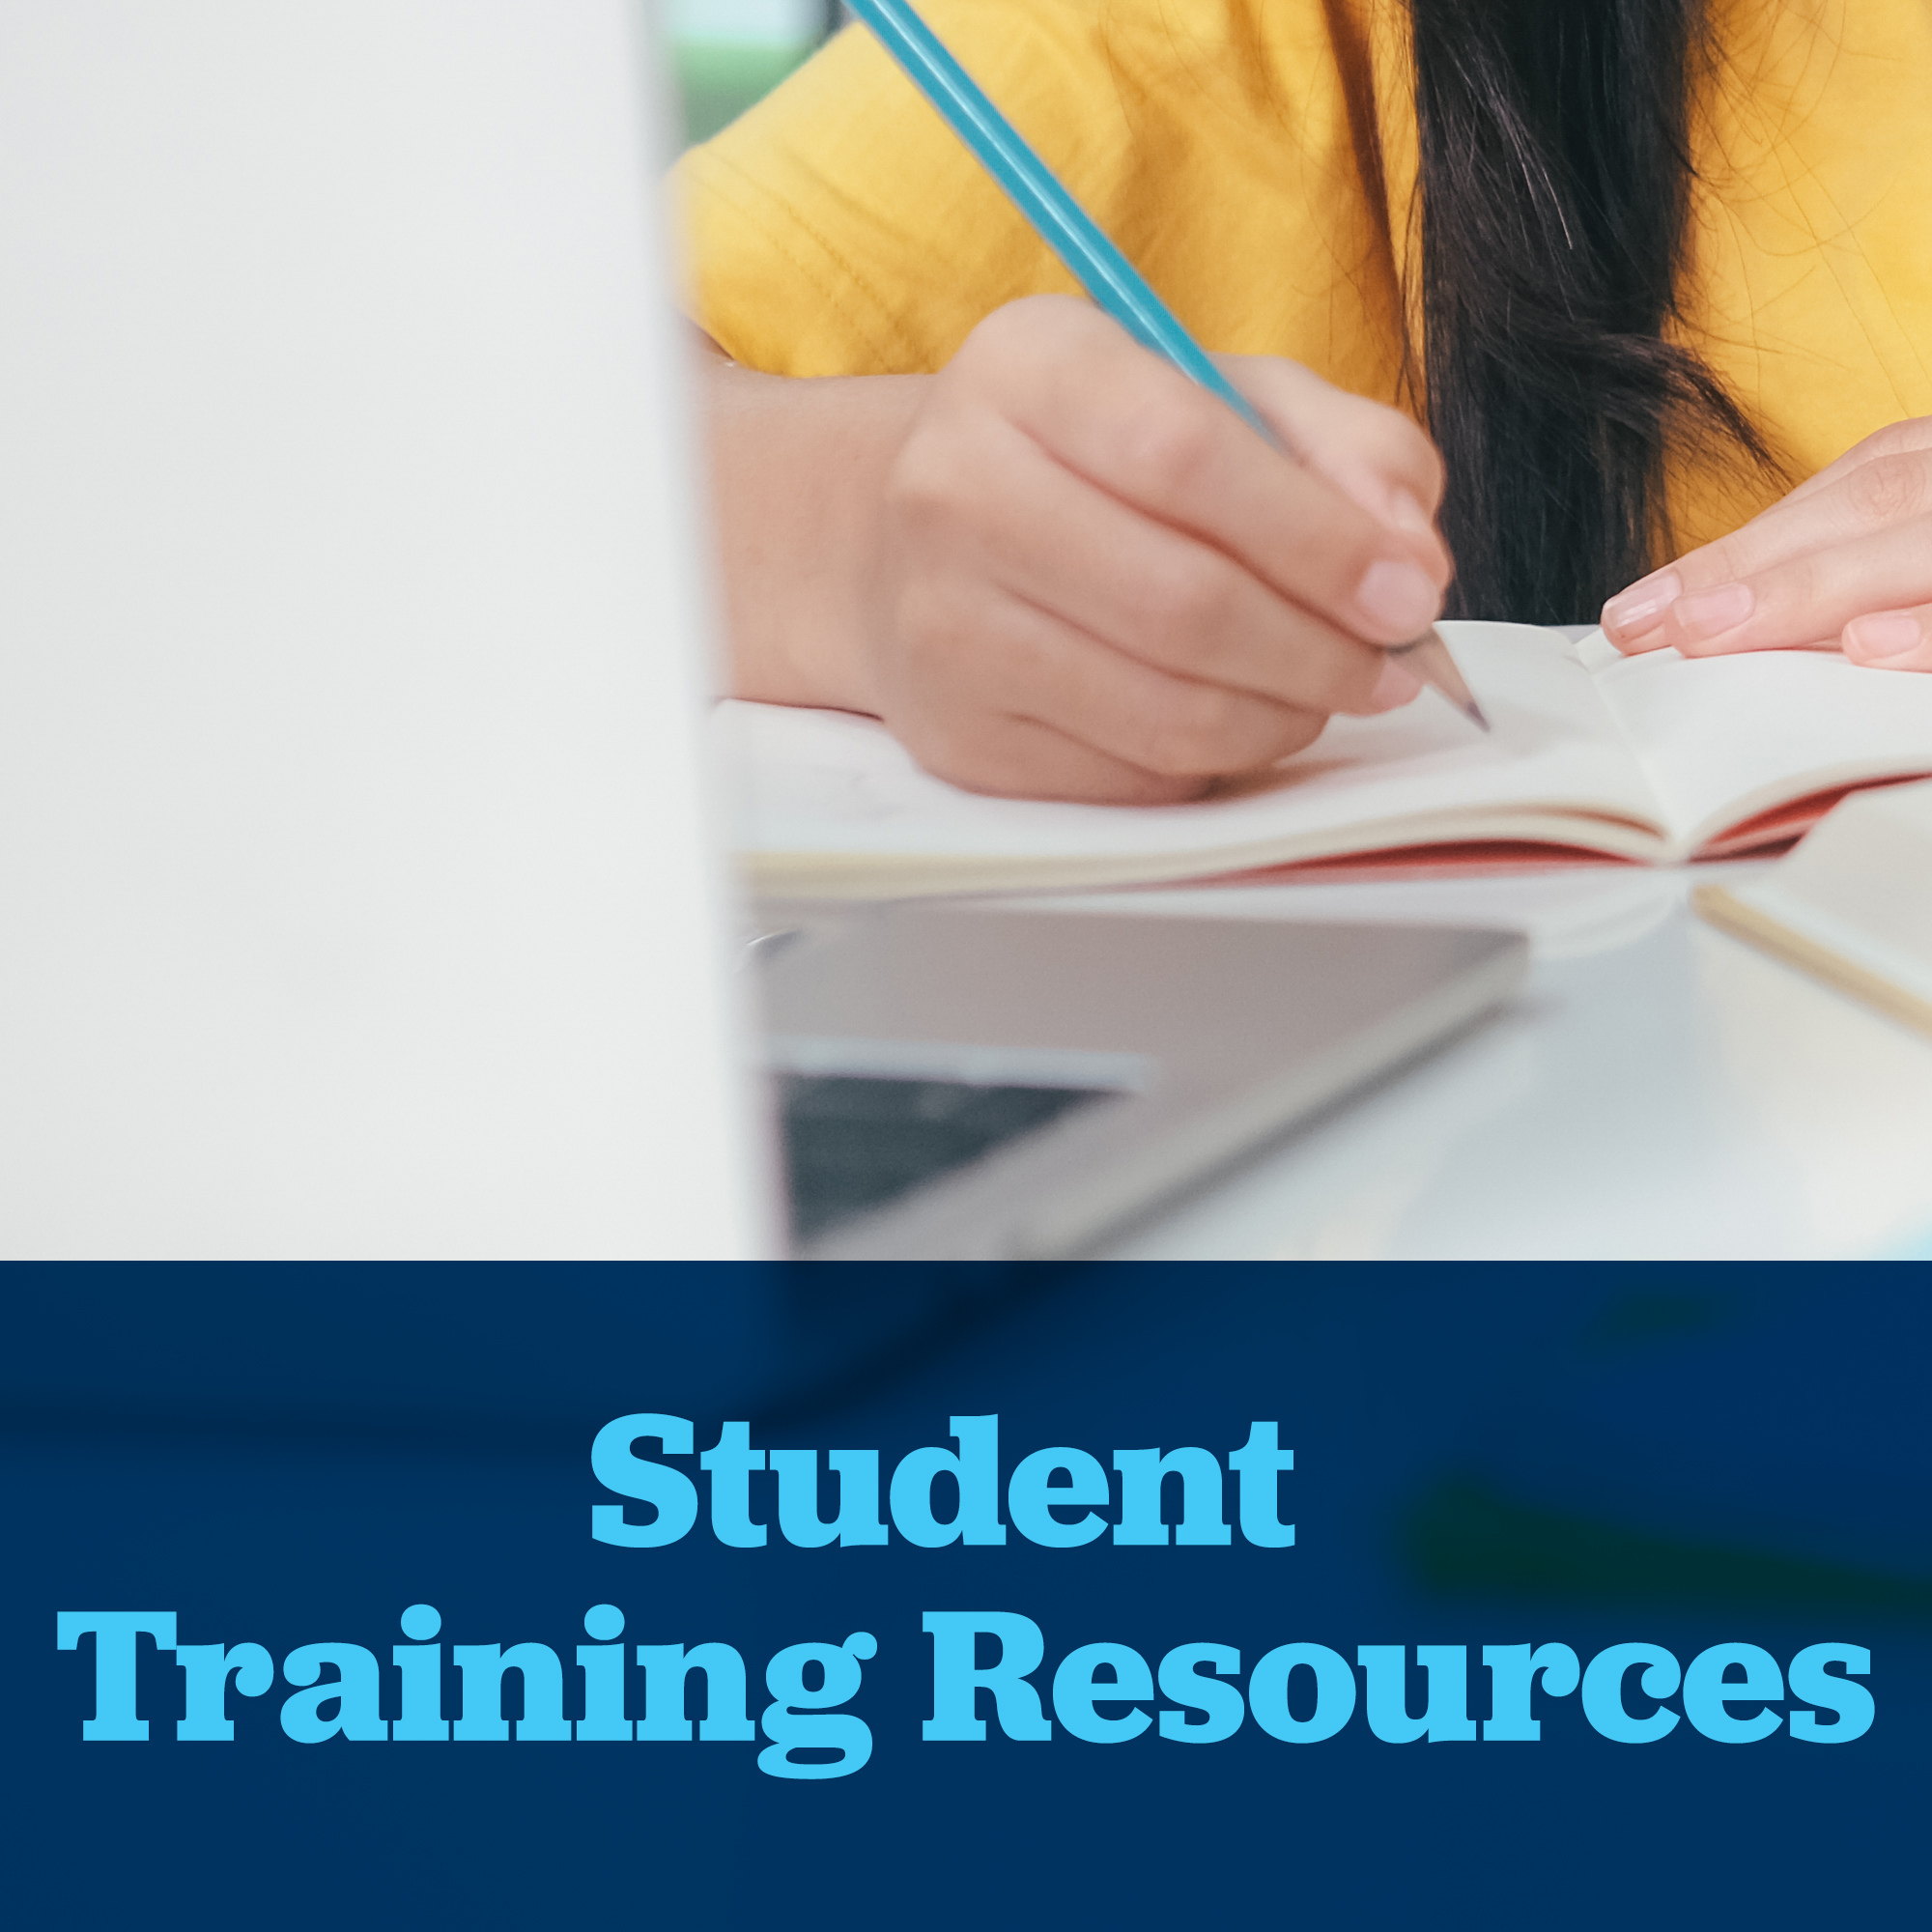 Student Resources